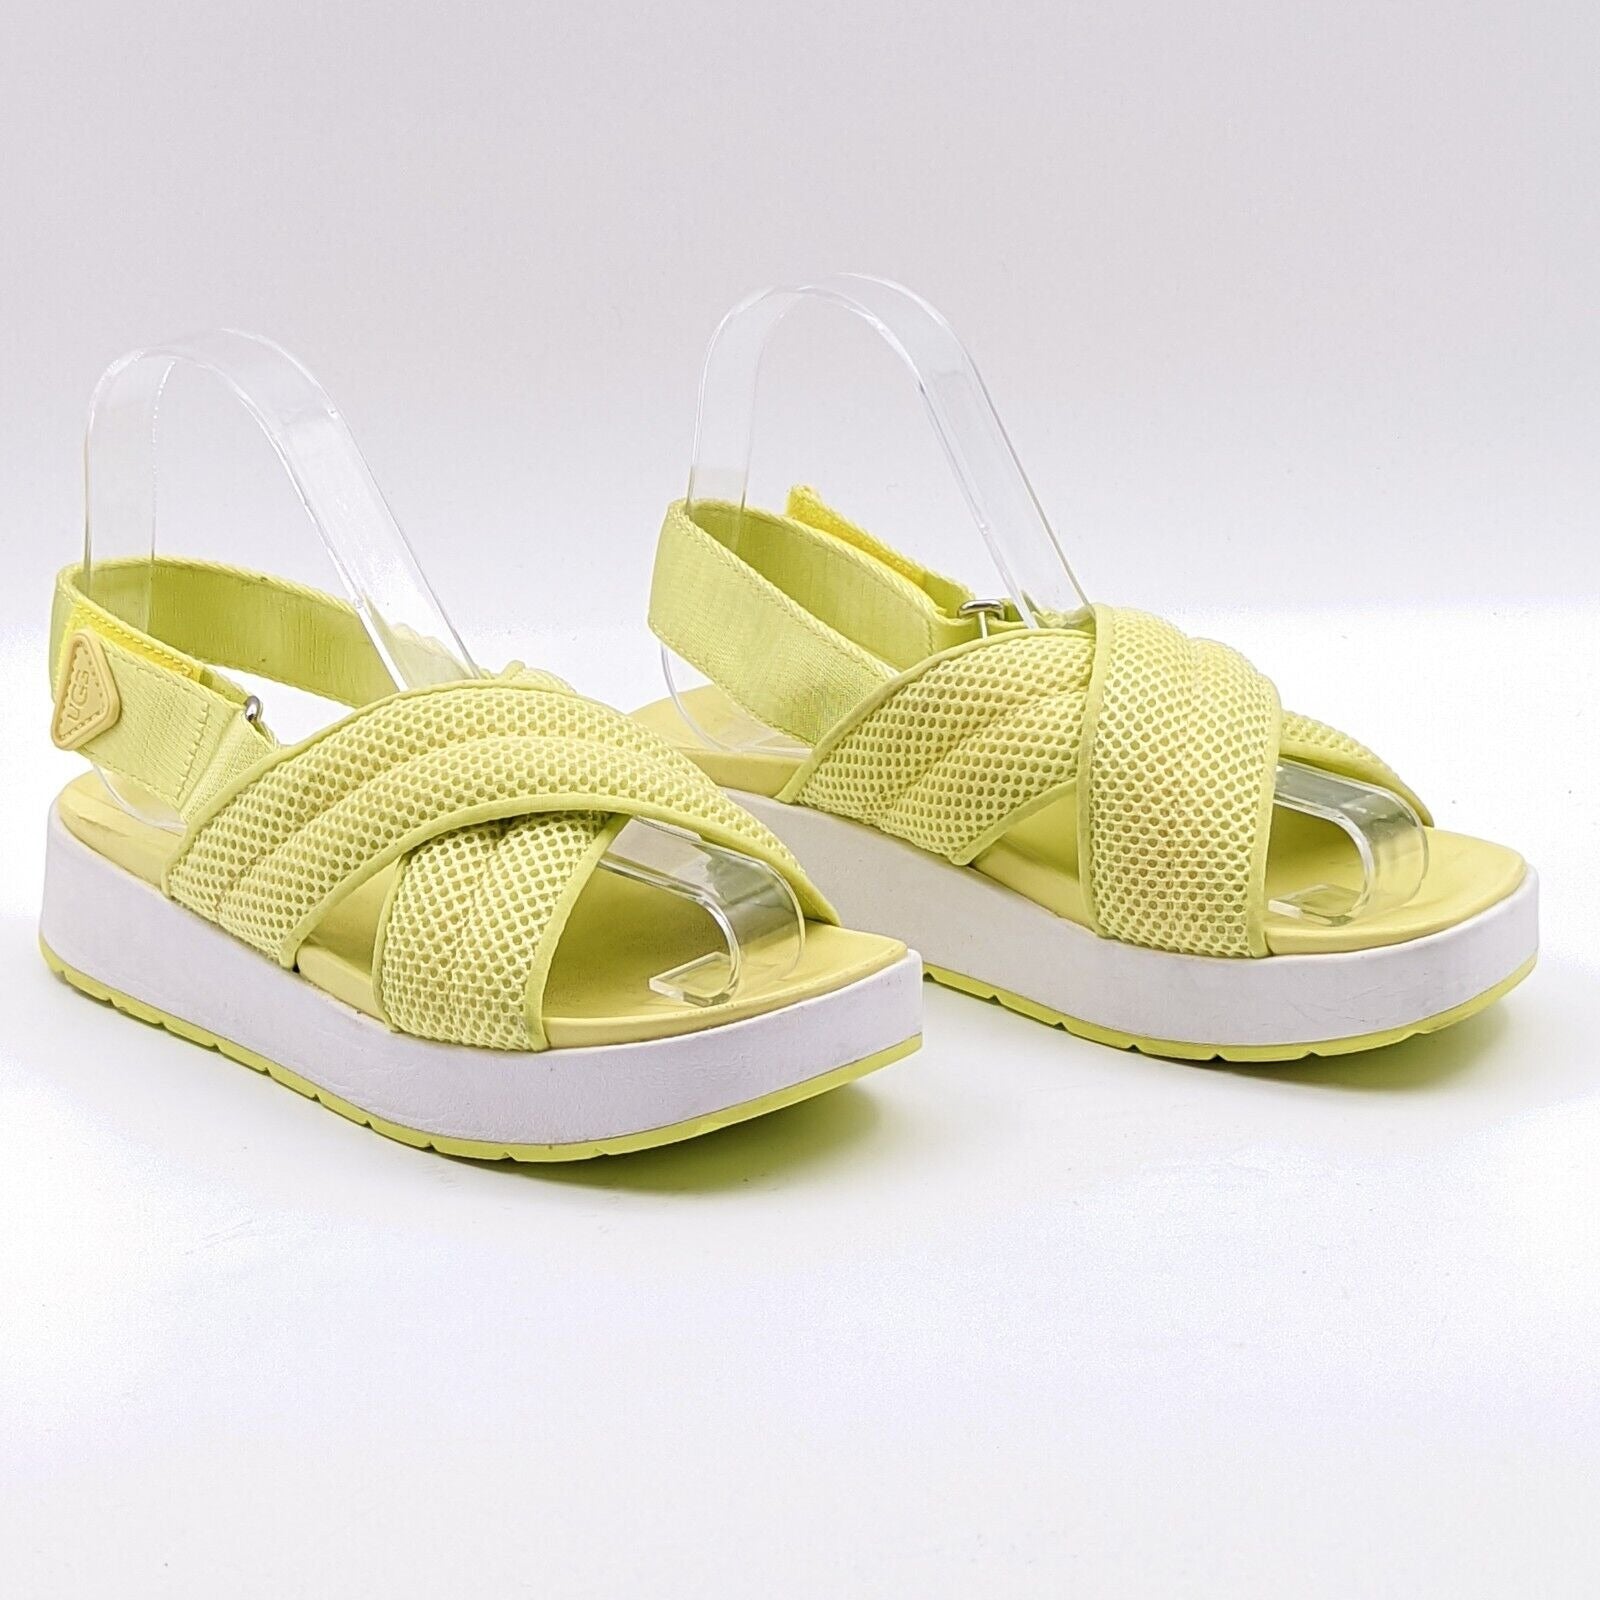 Adidas Women Comfort Flip-Flops Sandals White/Pink FY8657 Size 9 NEW